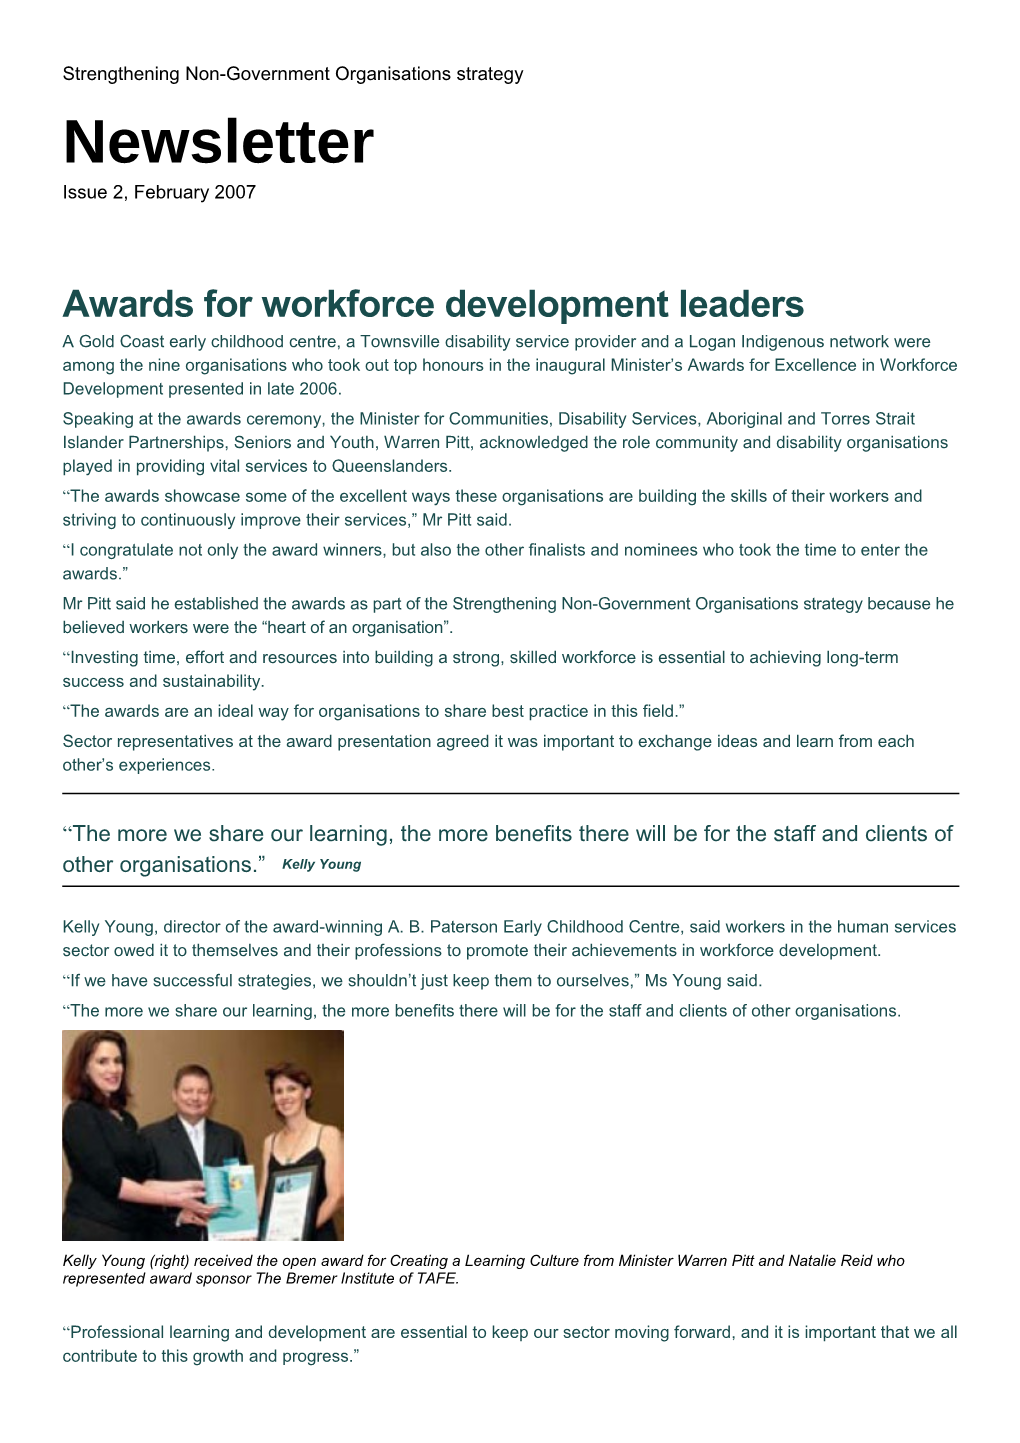 Awards For Workforce Development Leaders